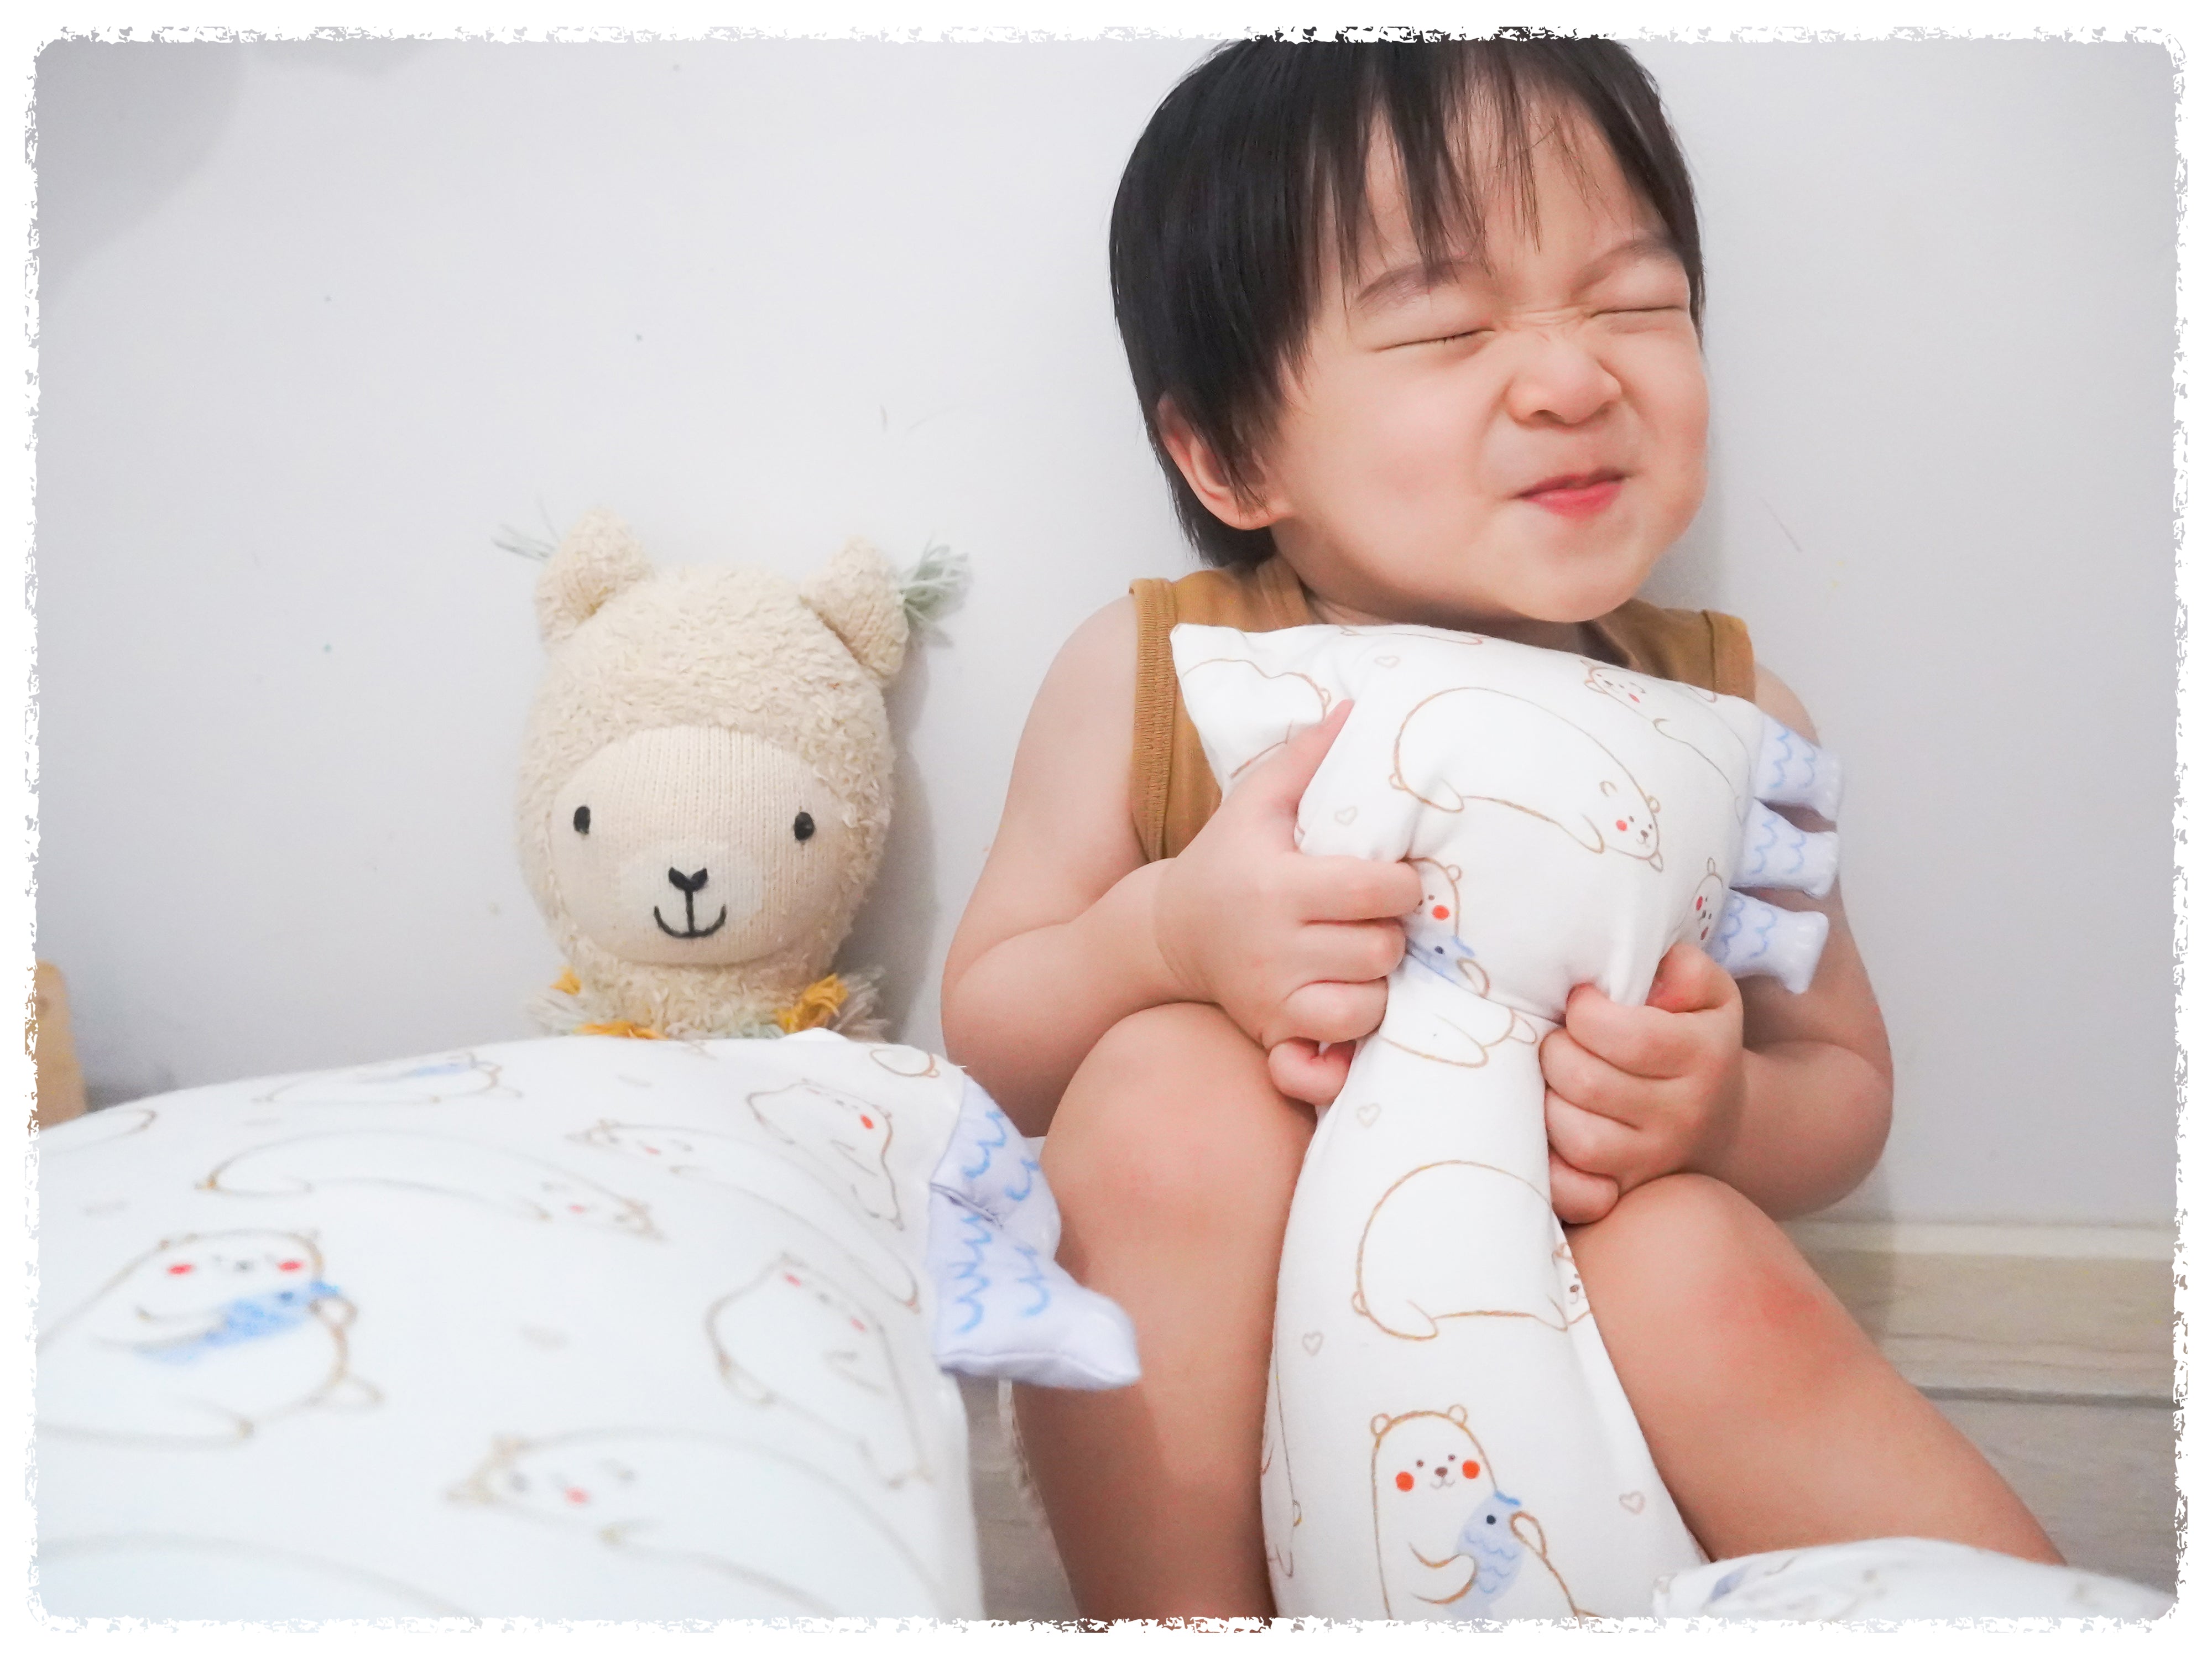 baby hugging cho maru bear pillow and smiling